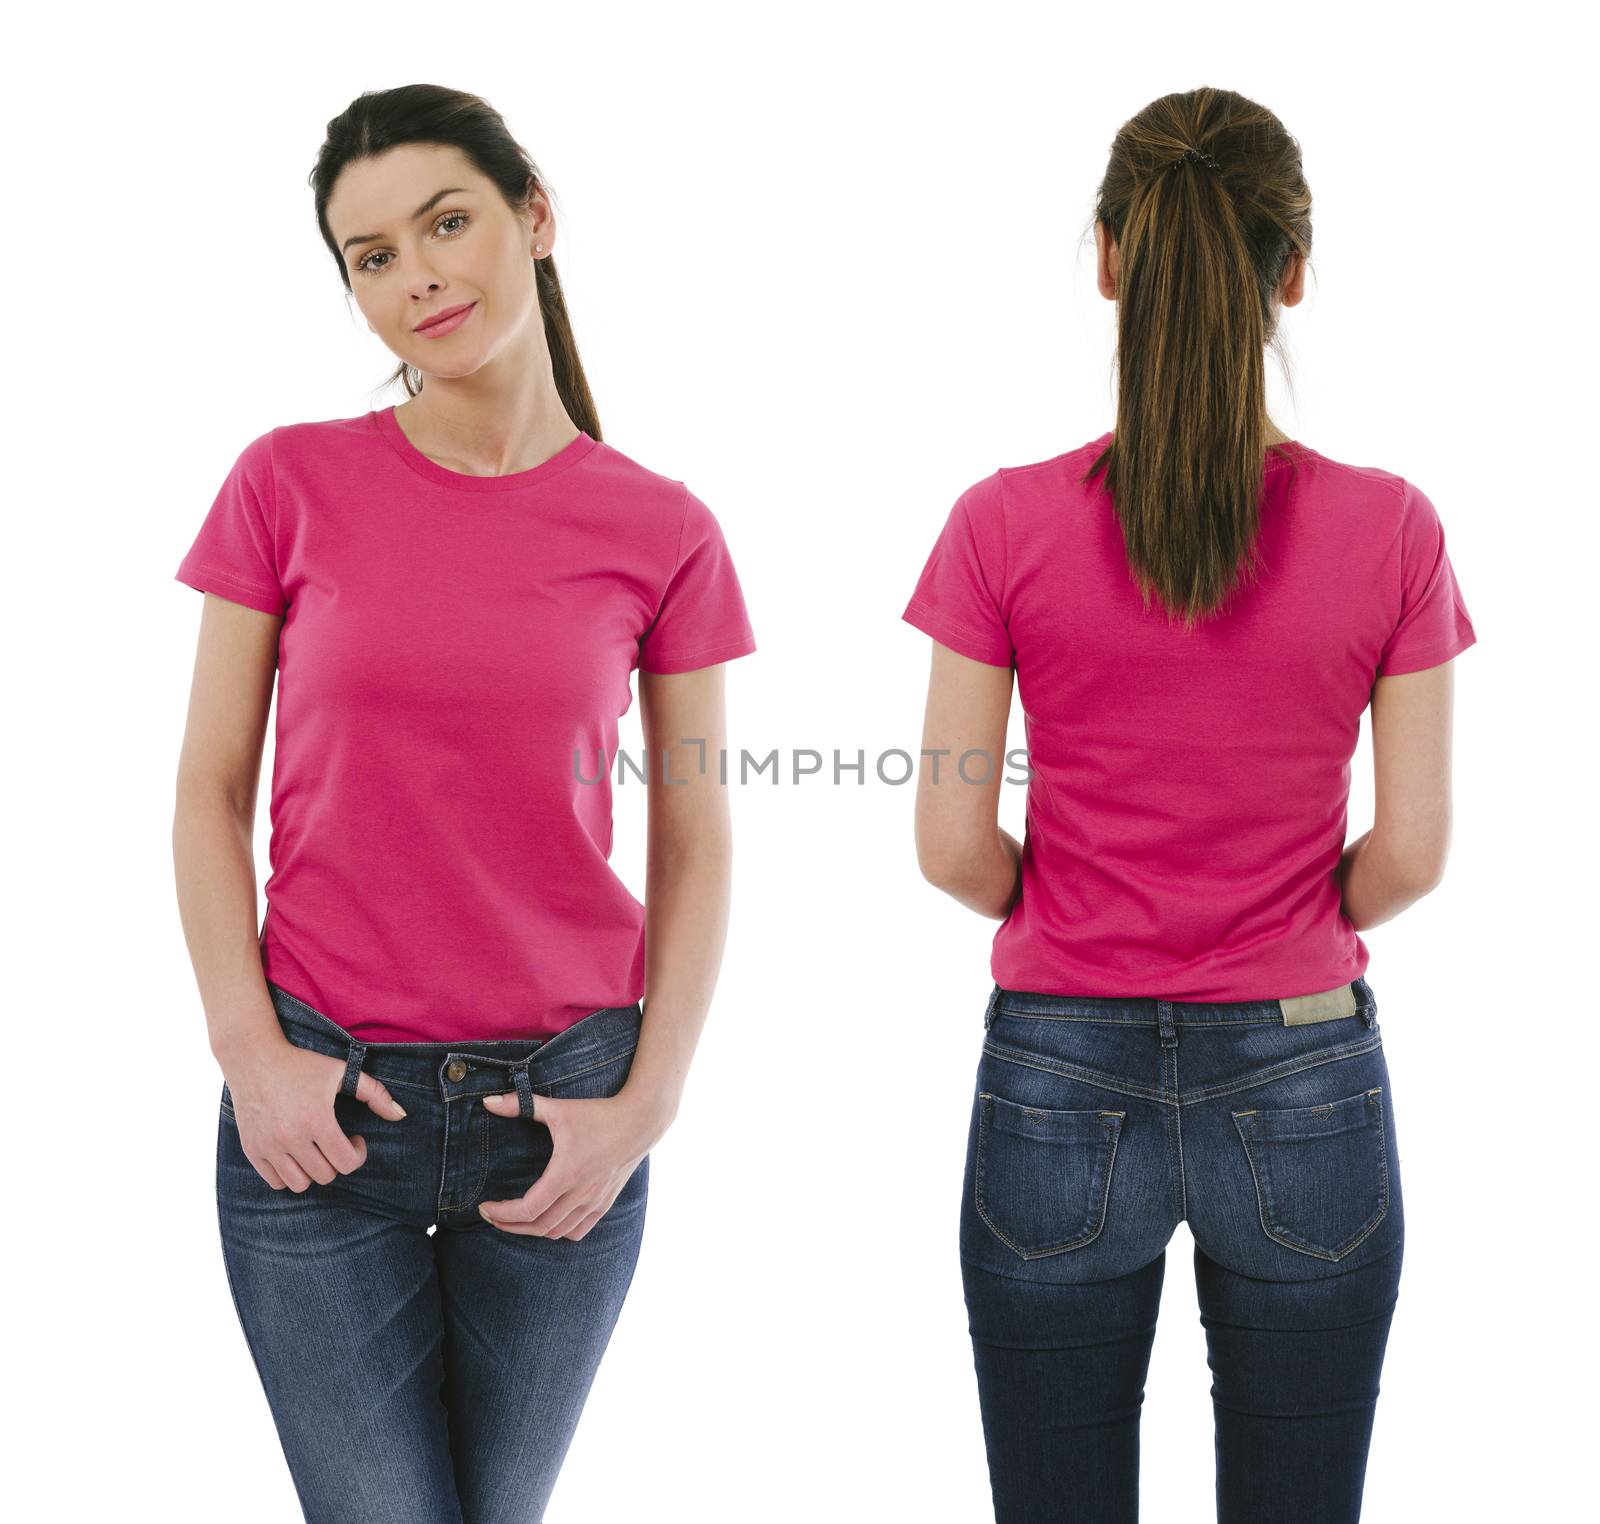 Brunette woman wearing blank pink shirt by sumners